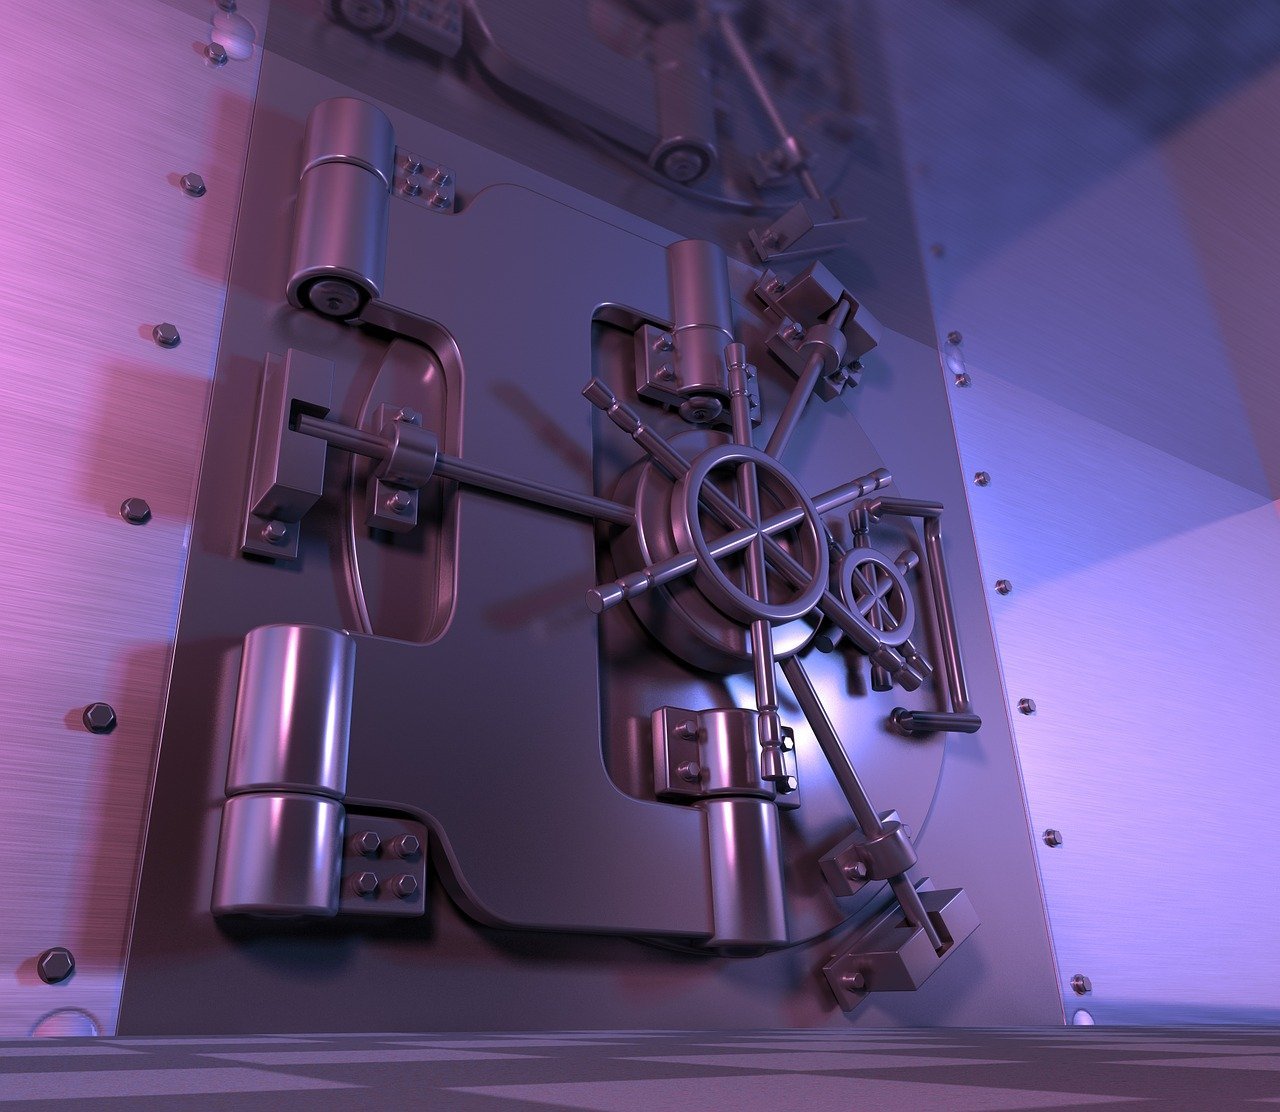 A close-up image of a safe or vault | Photo: Pixabay/Reimund Bertrams